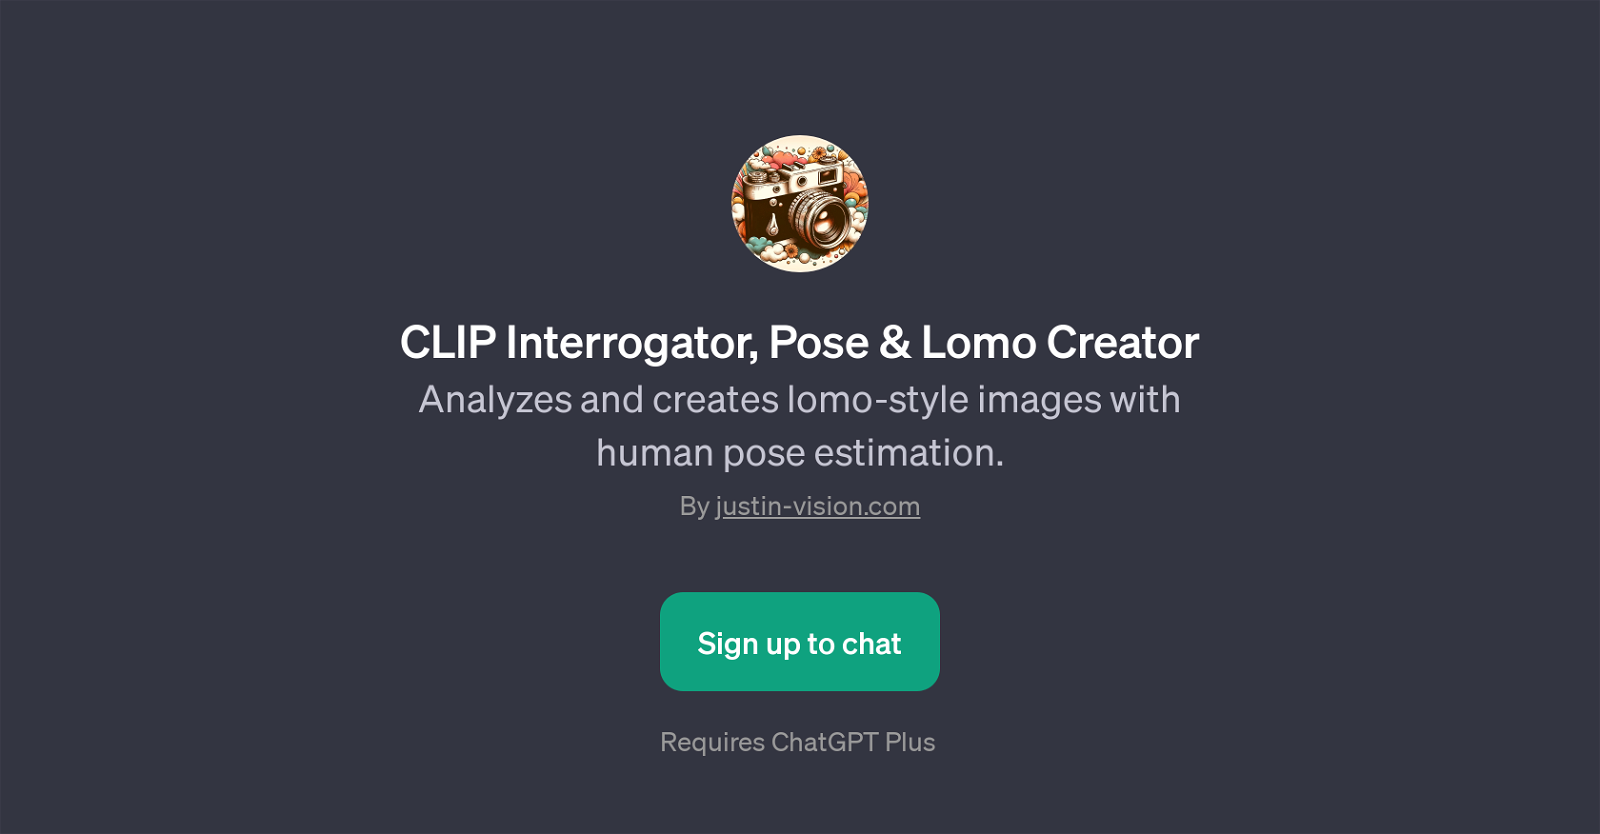 CLIP Interrogator, Pose & Lomo Creator website